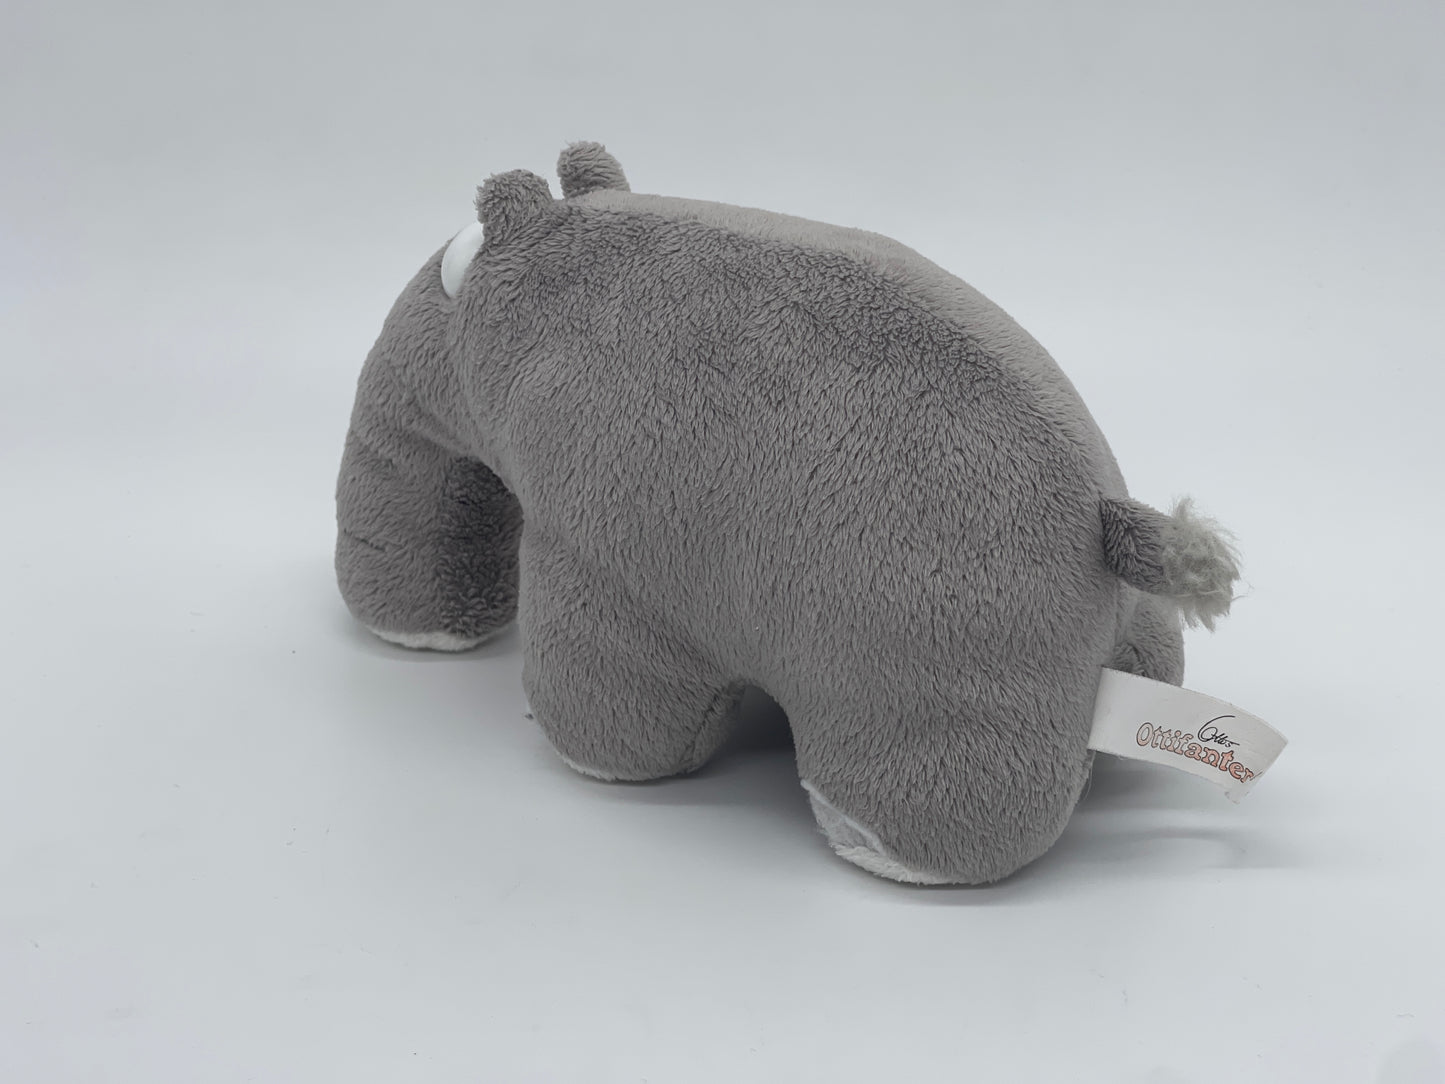 Plüschfigur "Ottifanten" Elefant Otto's Ottifanten 20cm